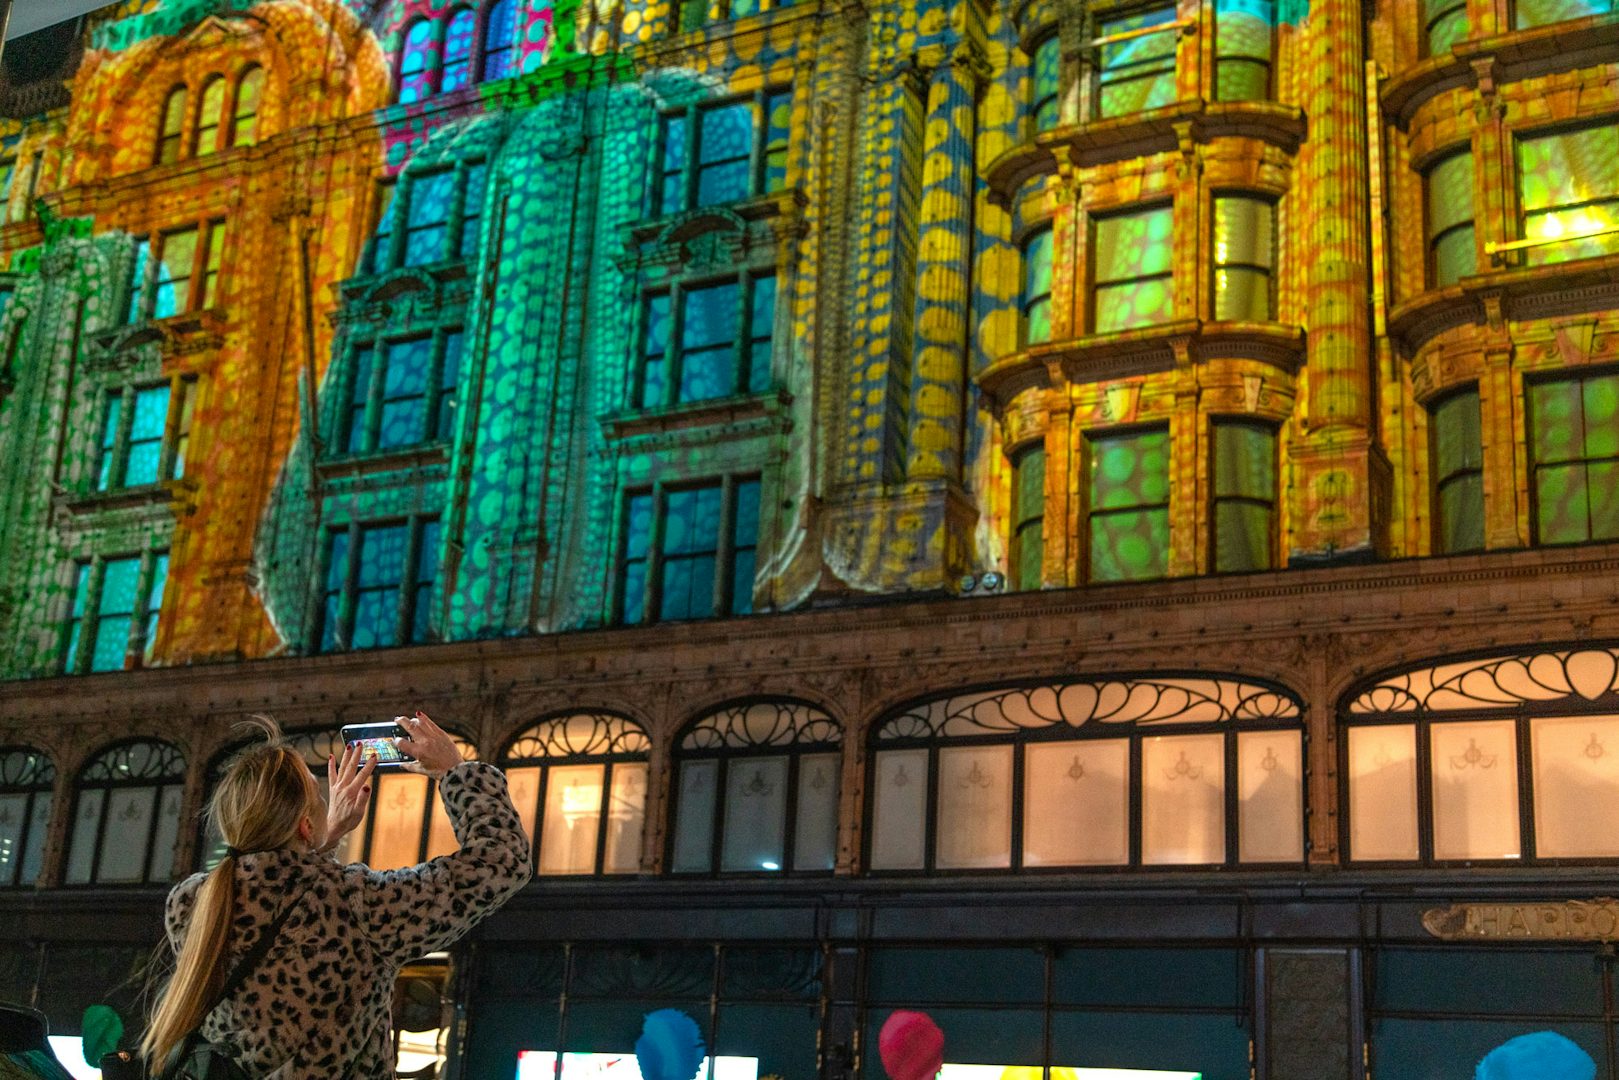 Louis Vuitton's New York Store Has Been Overtaken by Polka Dots